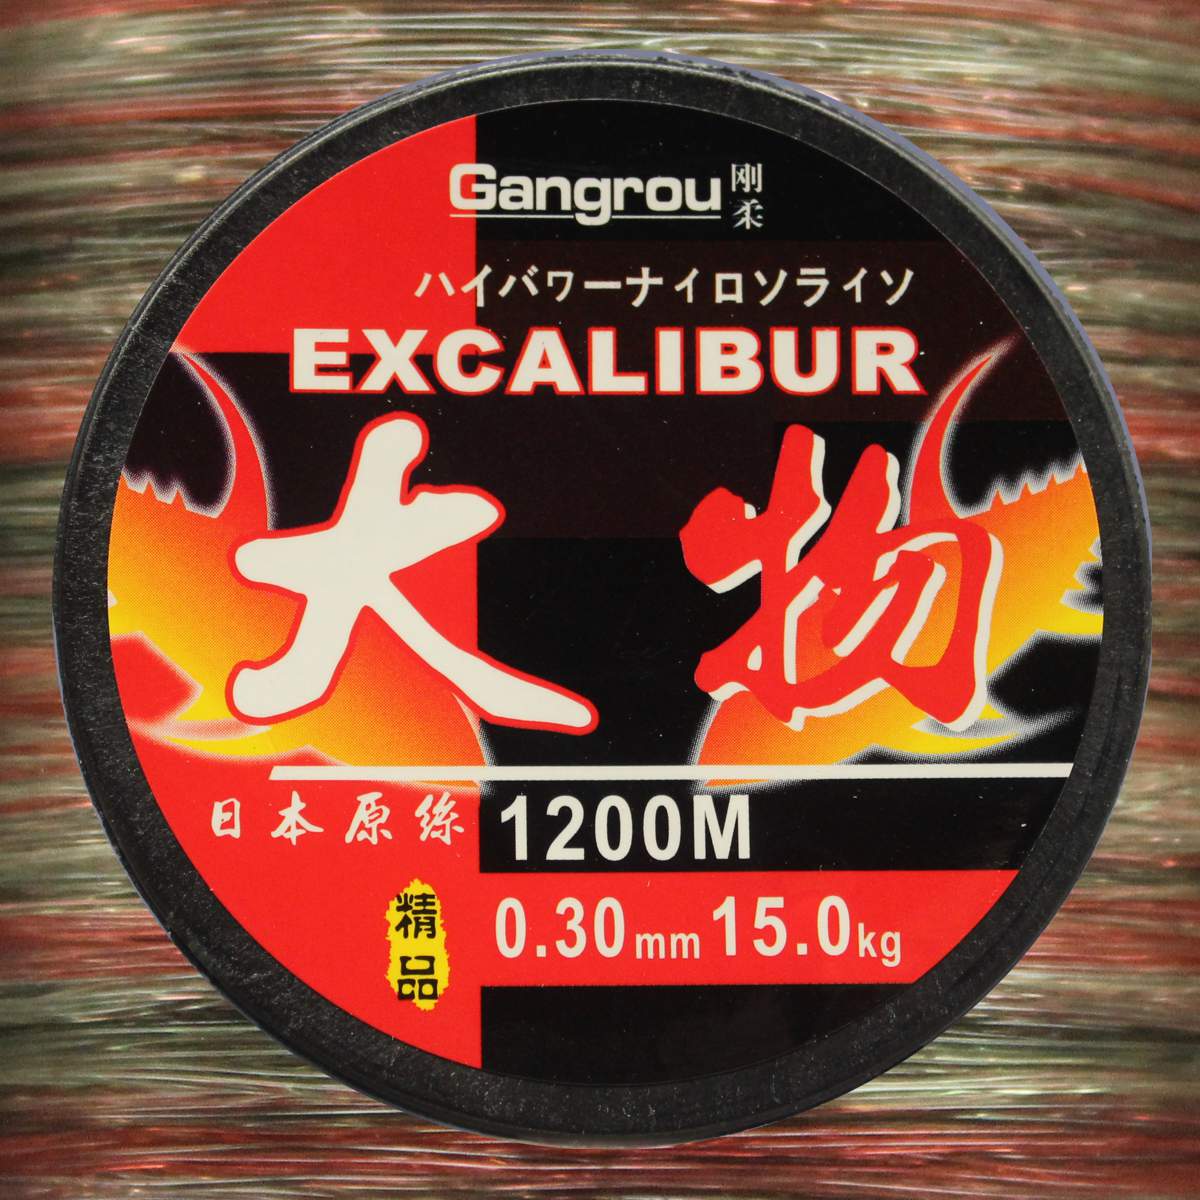 Gangrou Excalibur 0,40mm 21.0Kg 1200M, monofile Angelschnur, mono line